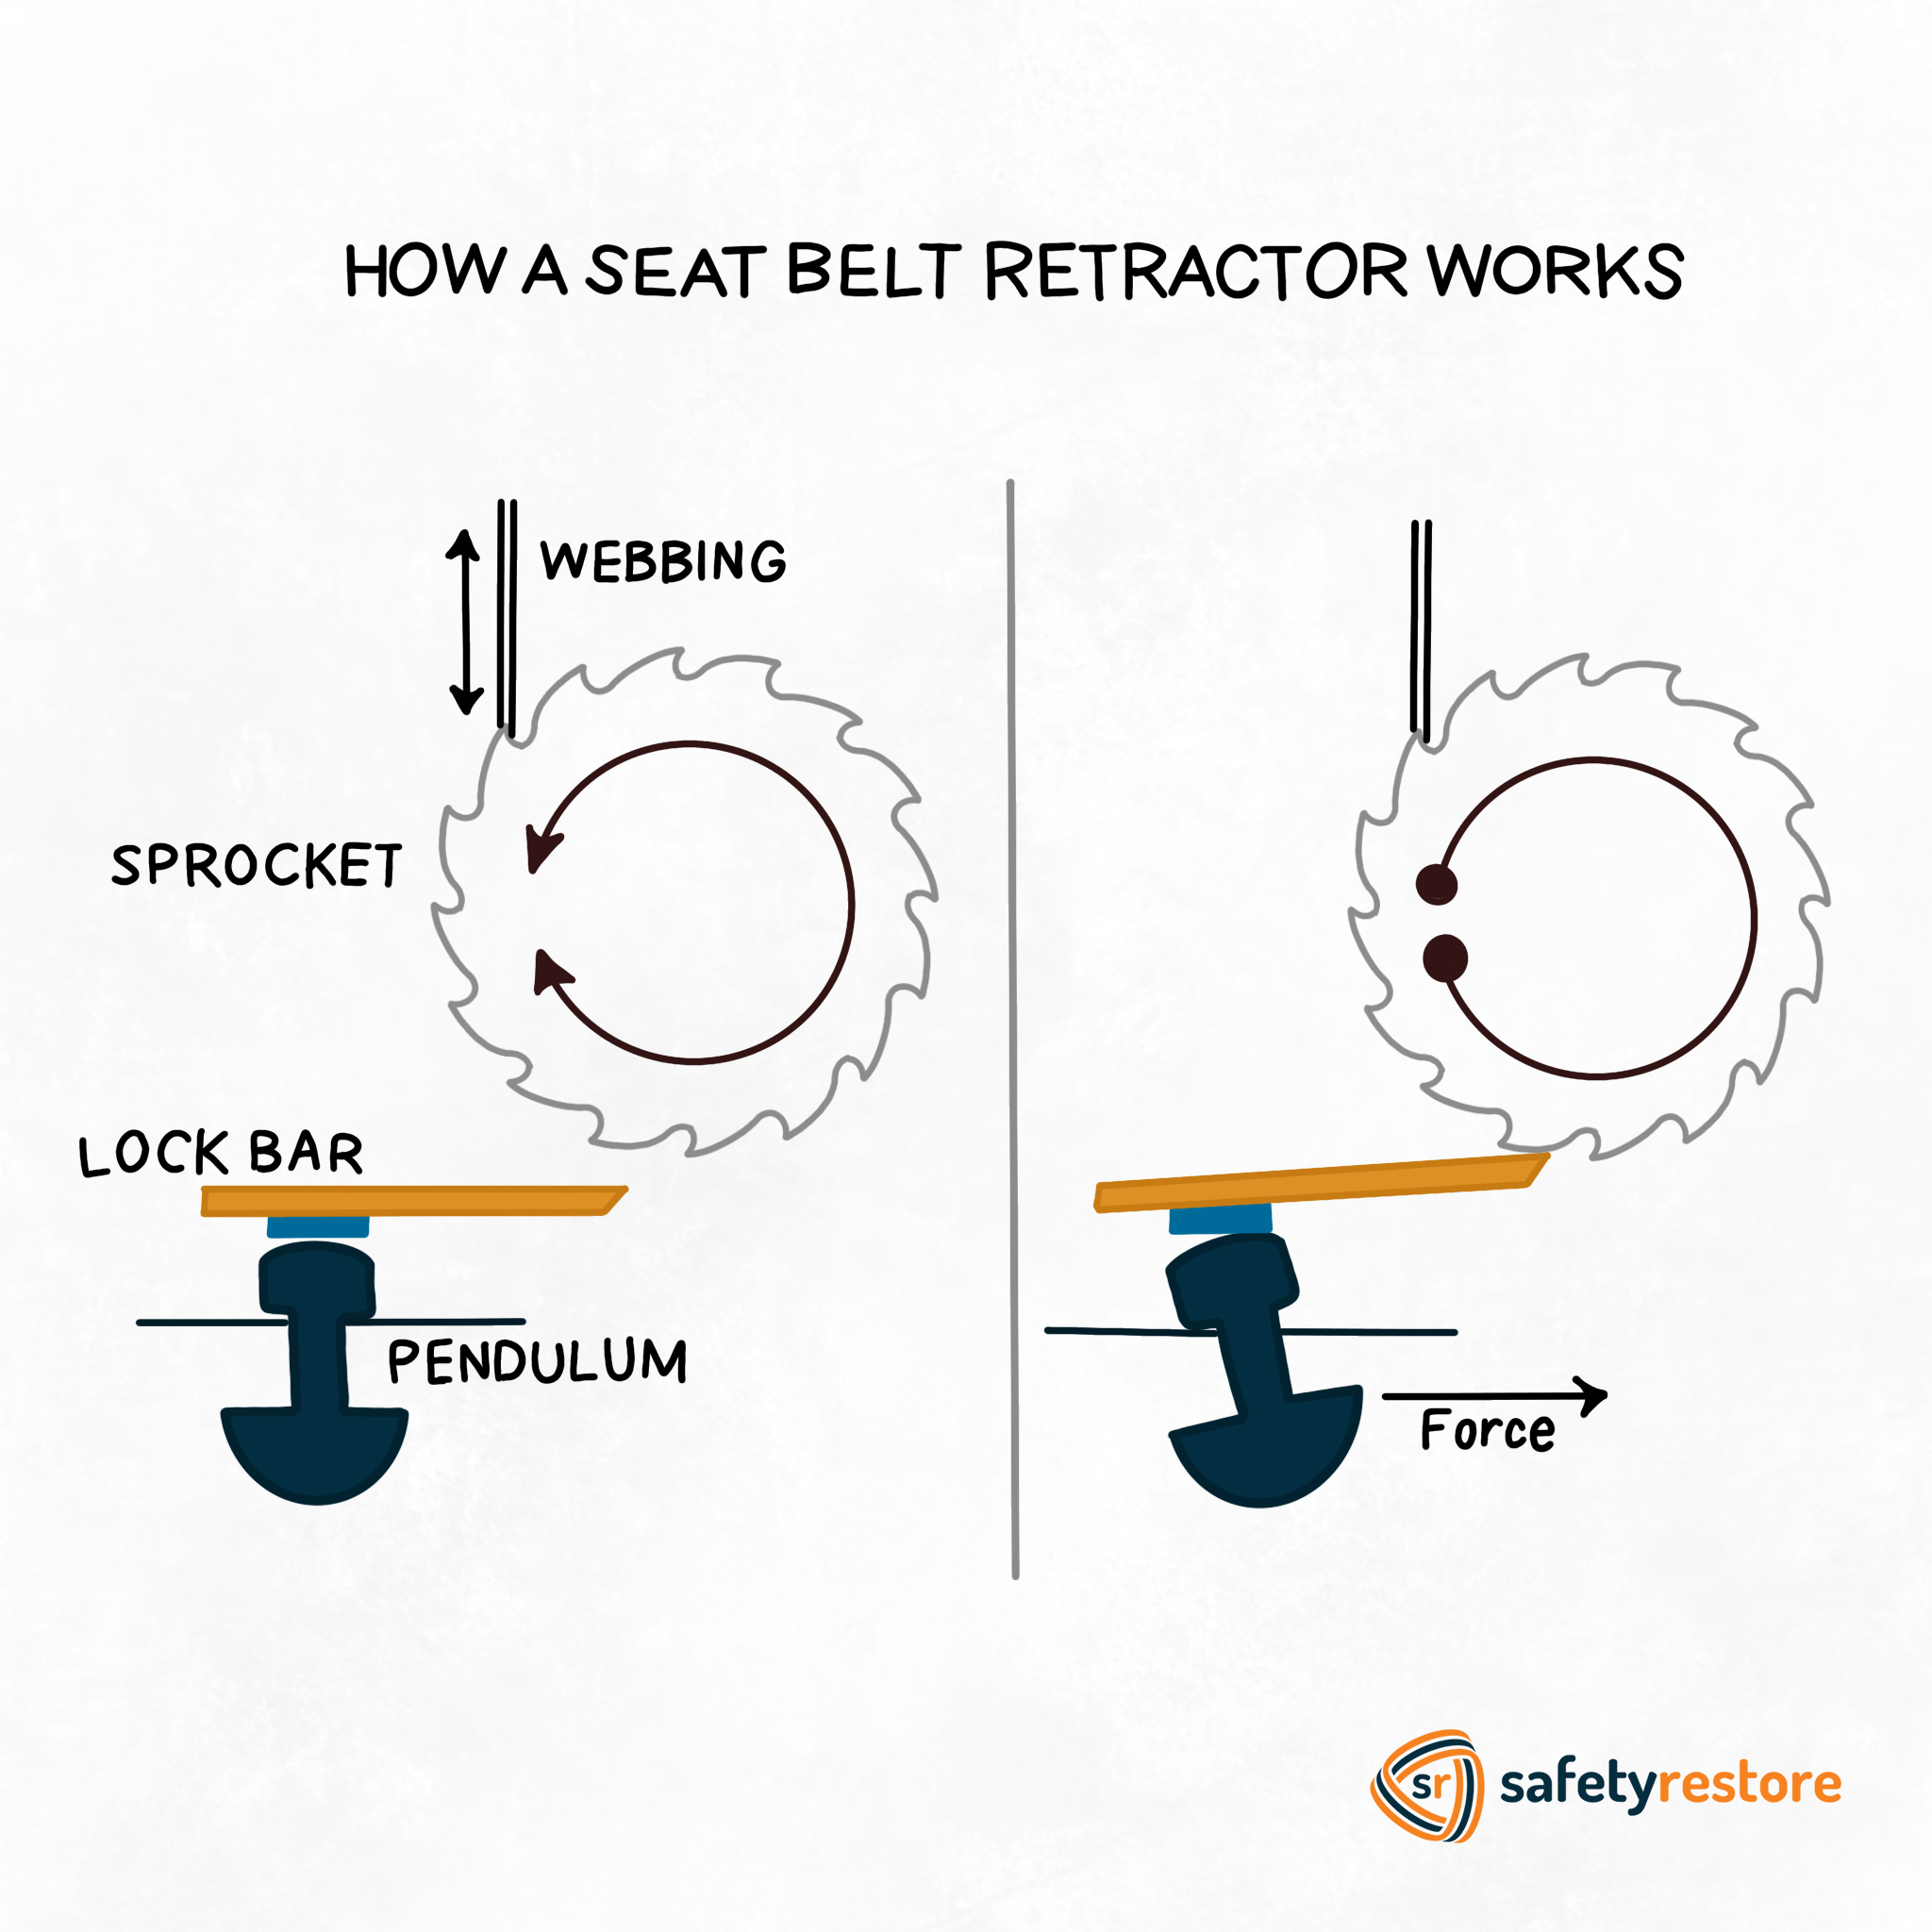 https://www.safetyrestore.com/blog/wp-content/uploads/2019/04/How-does-a-seatbelt-work.jpg